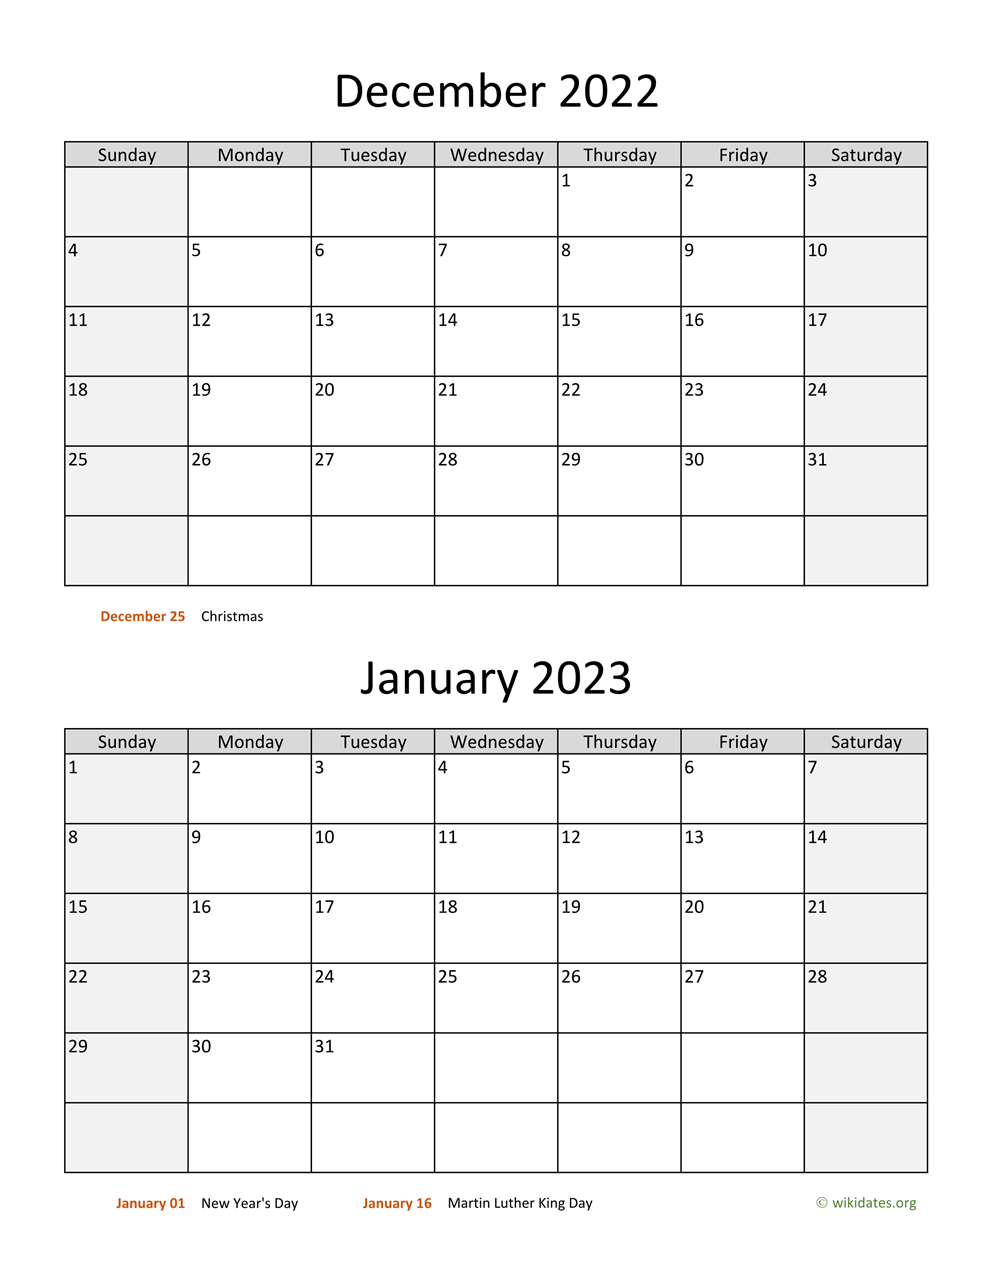 December 2022 To January 2023 Calendar December 2022 And January 2023 Calendar | Wikidates.org